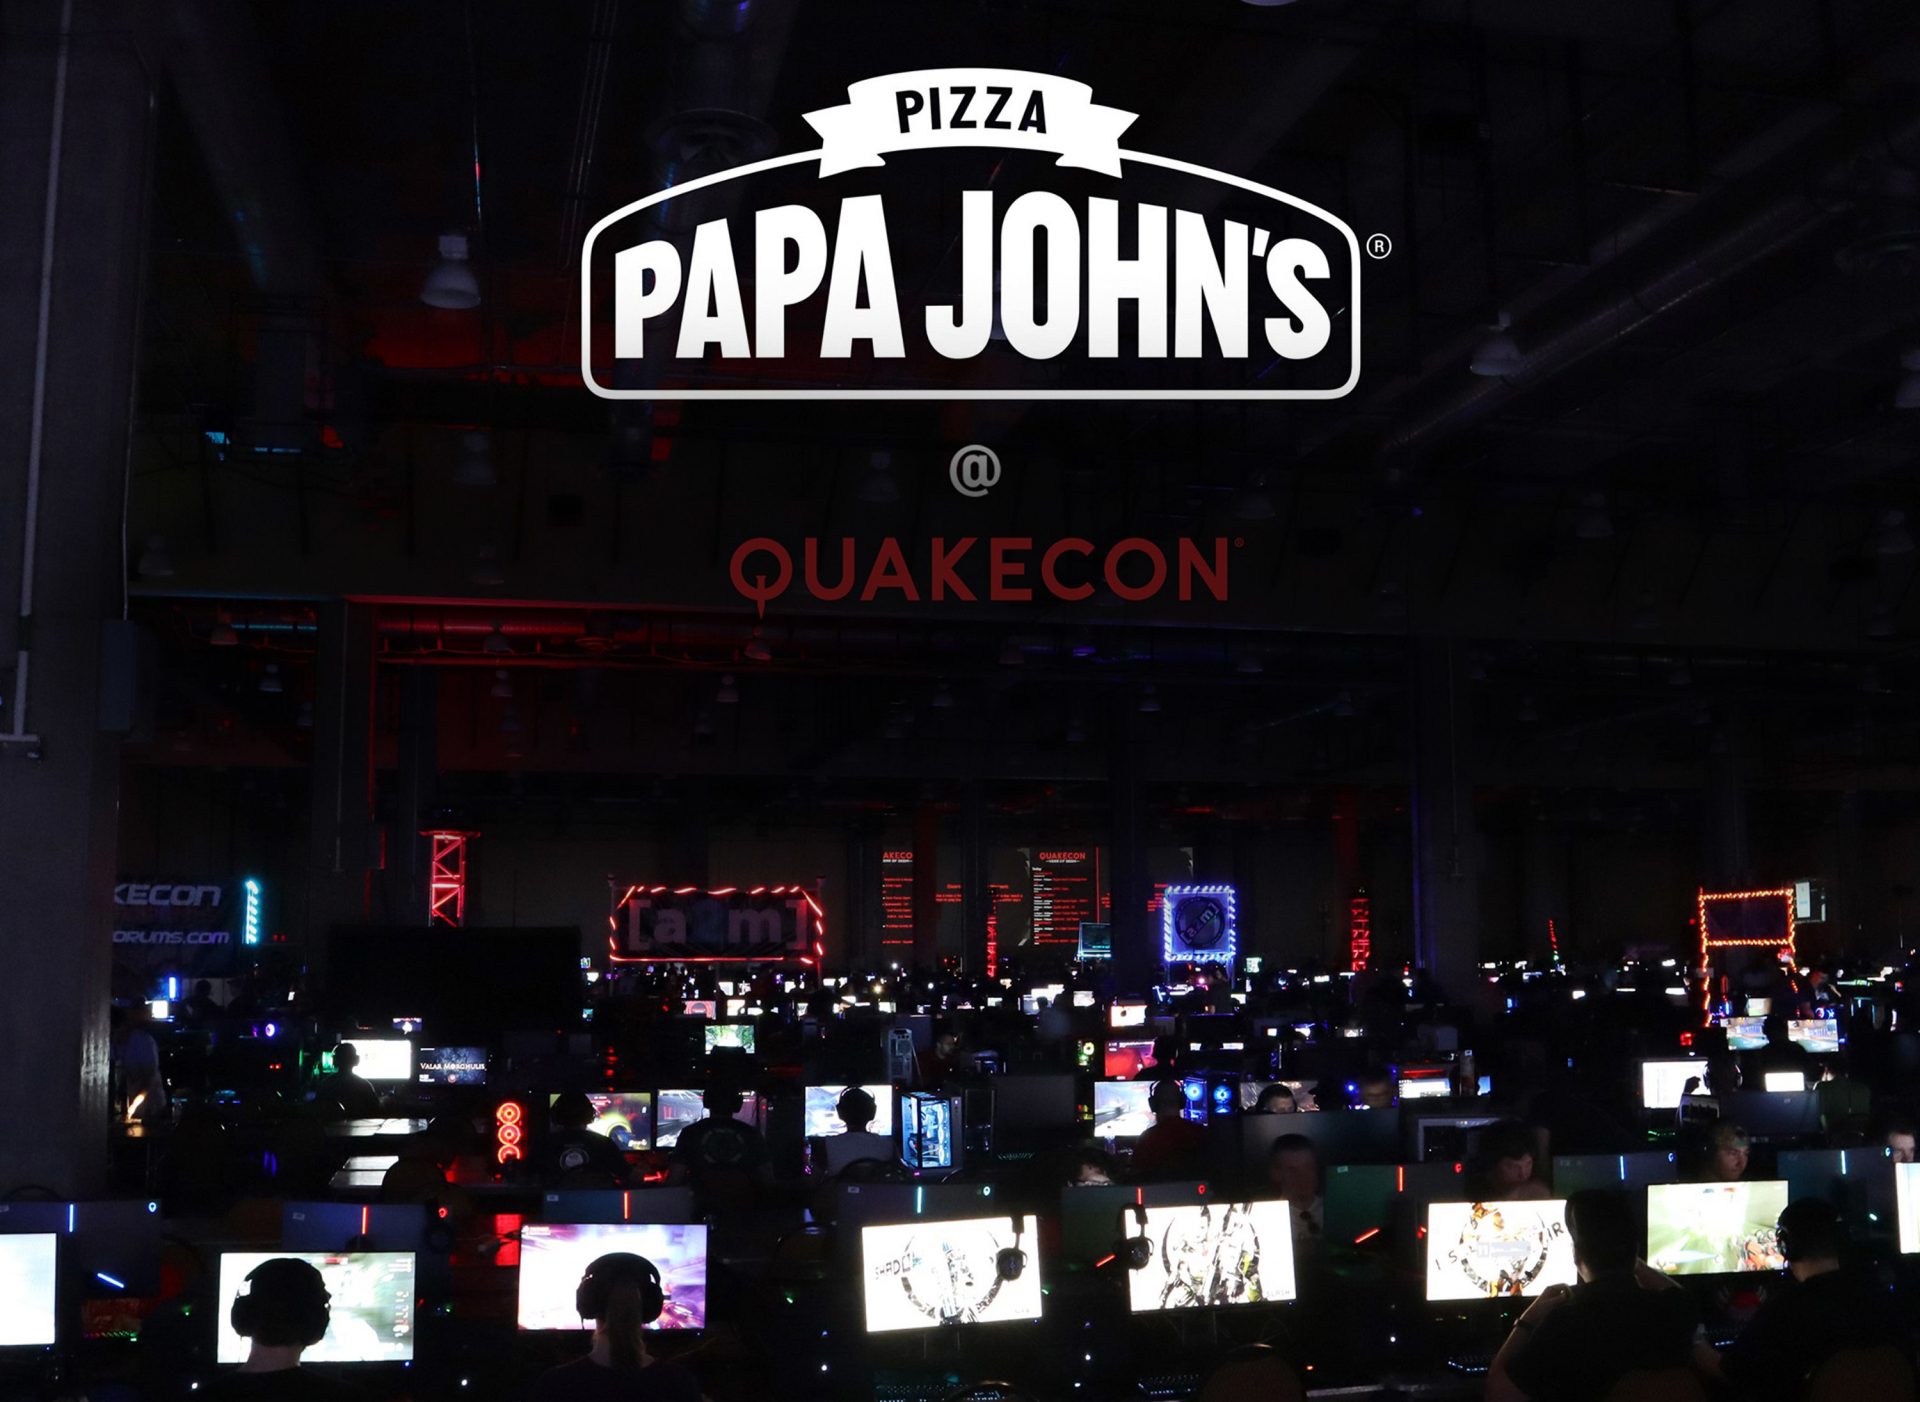 Papa John's sponsor Quakecon